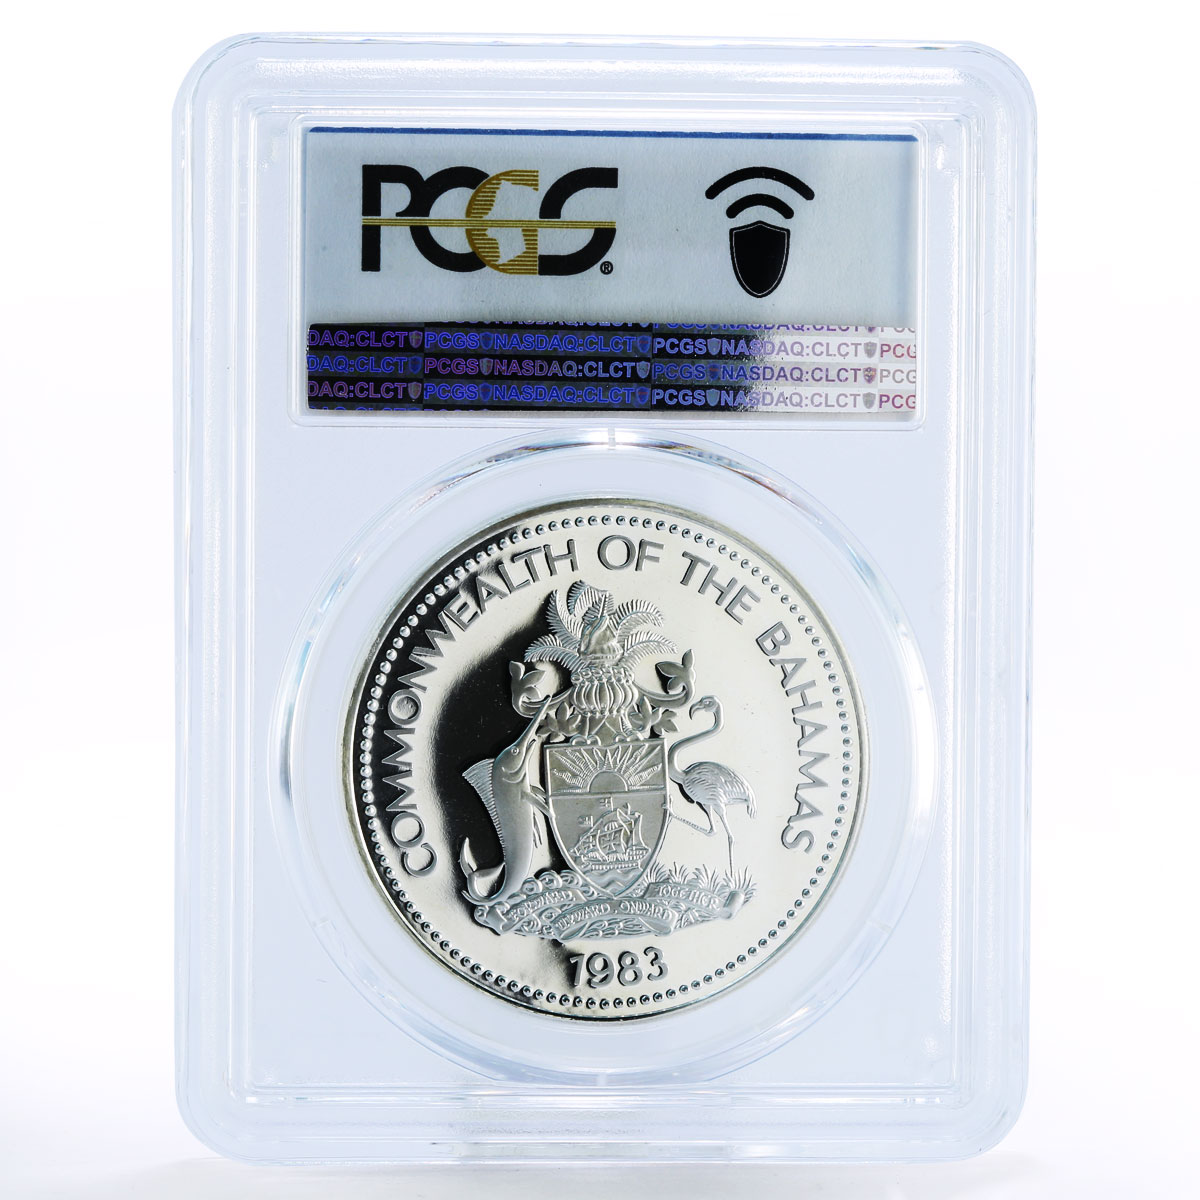 Bahamas 10 dollars Coronation Jubilee Royal Symbols PR70 PCGS silver coin 1983